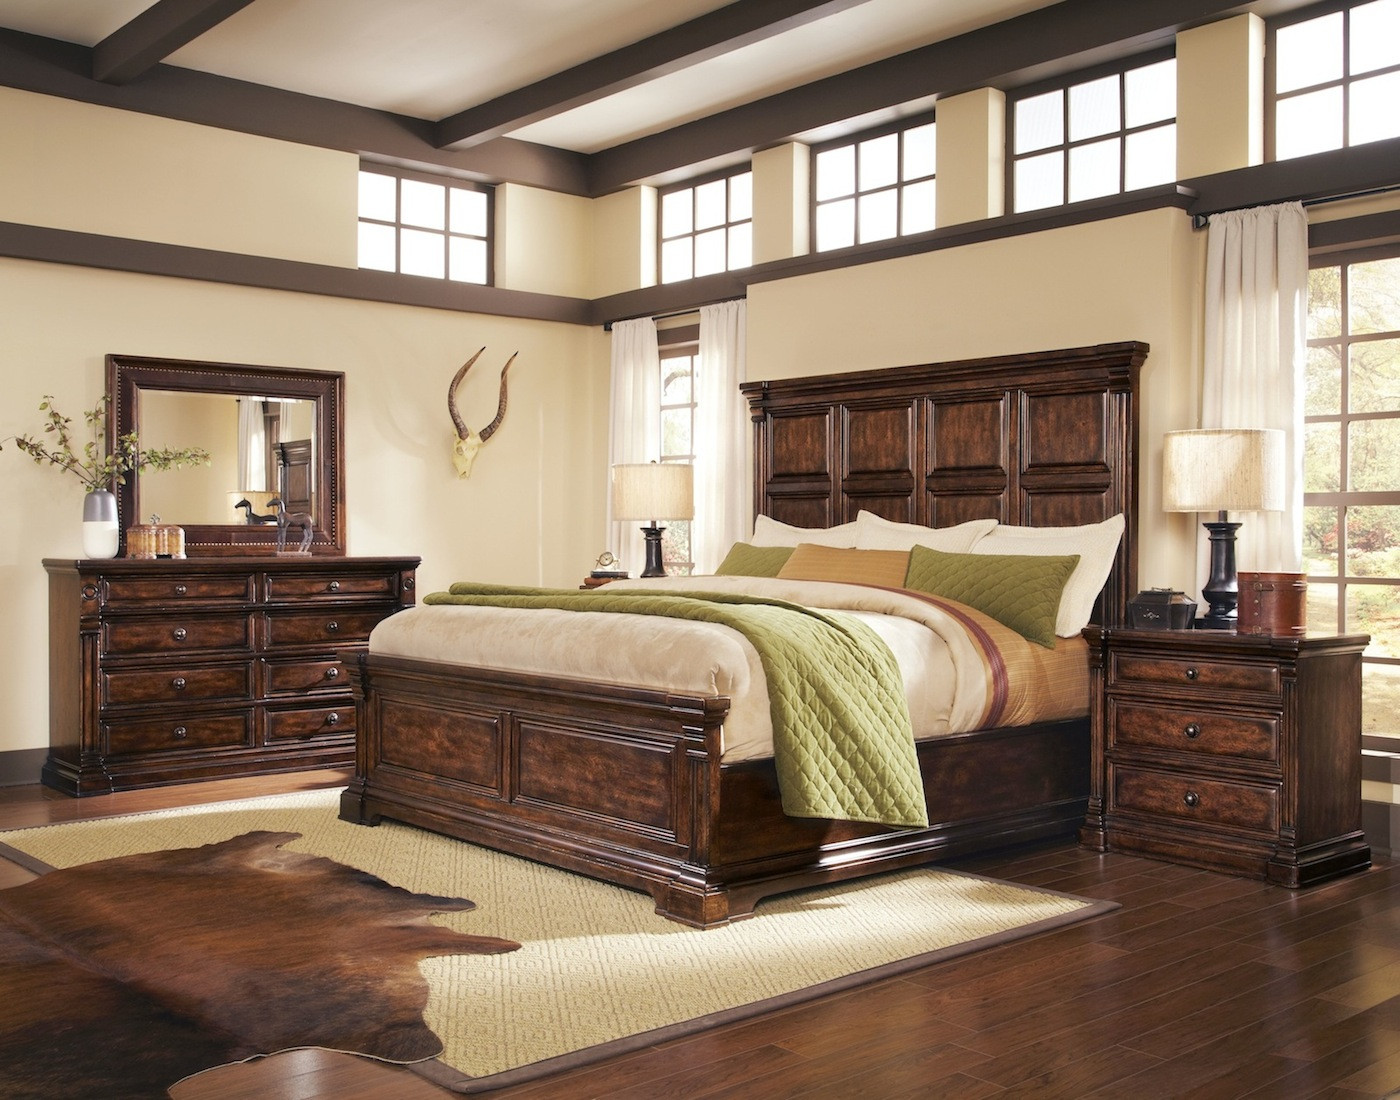 Rustic Wood Bedroom Sets
 Whiskey Oak Rustic Inspired Wooden Panel Bedroom Set